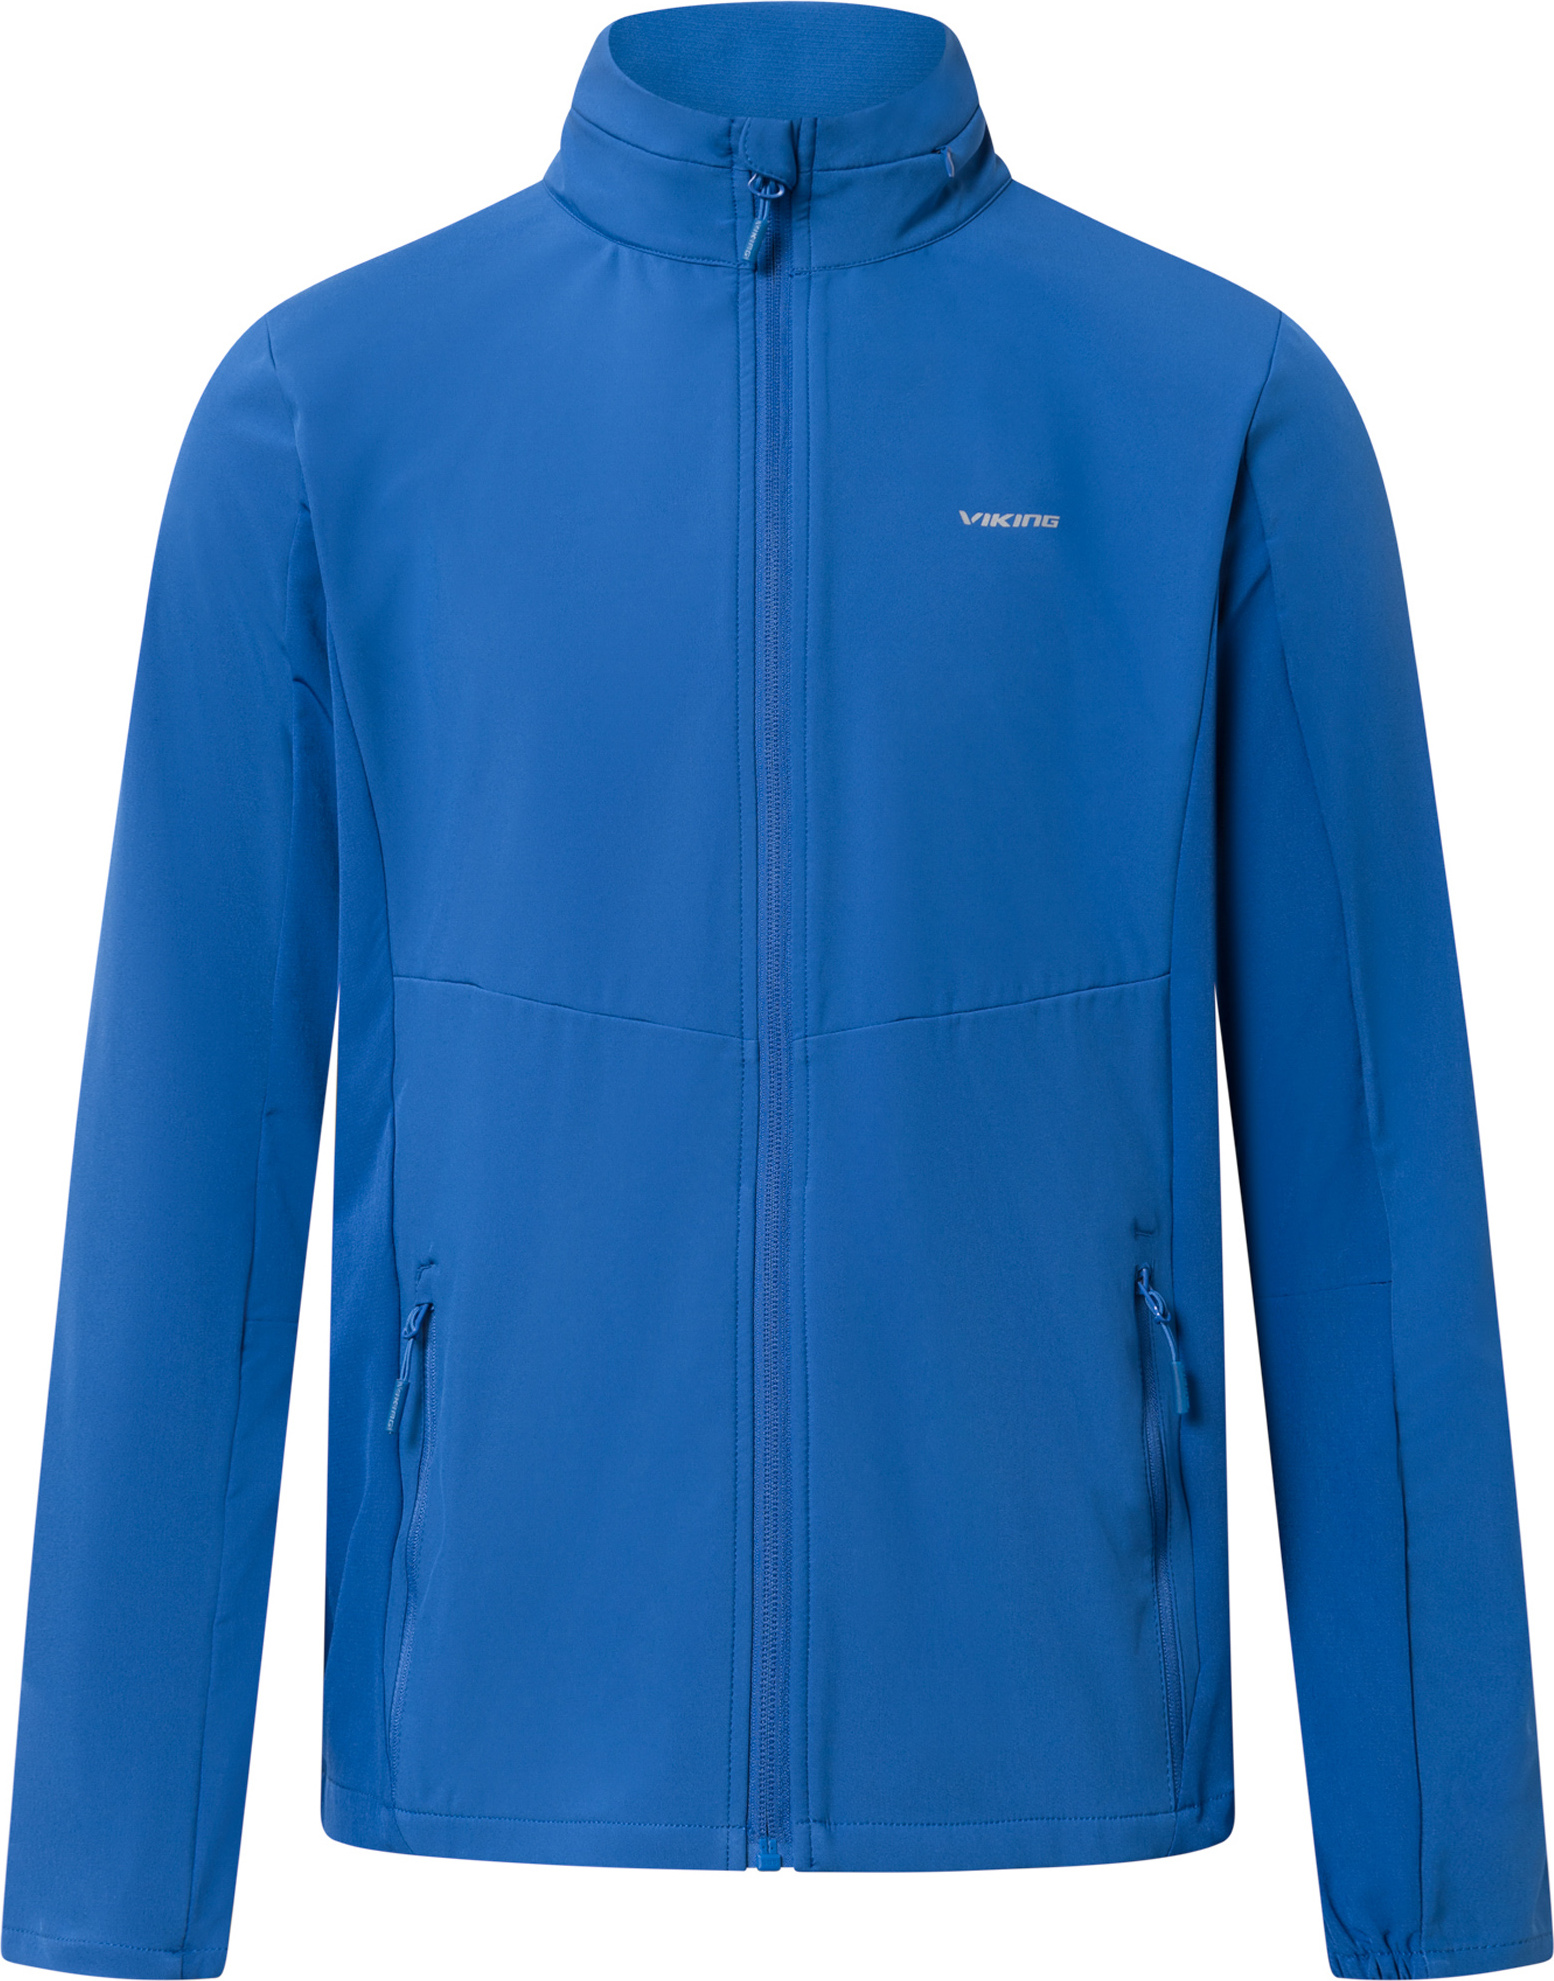 Pánská outdoorová bunda VIKING Acadia modrá Velikost: XL